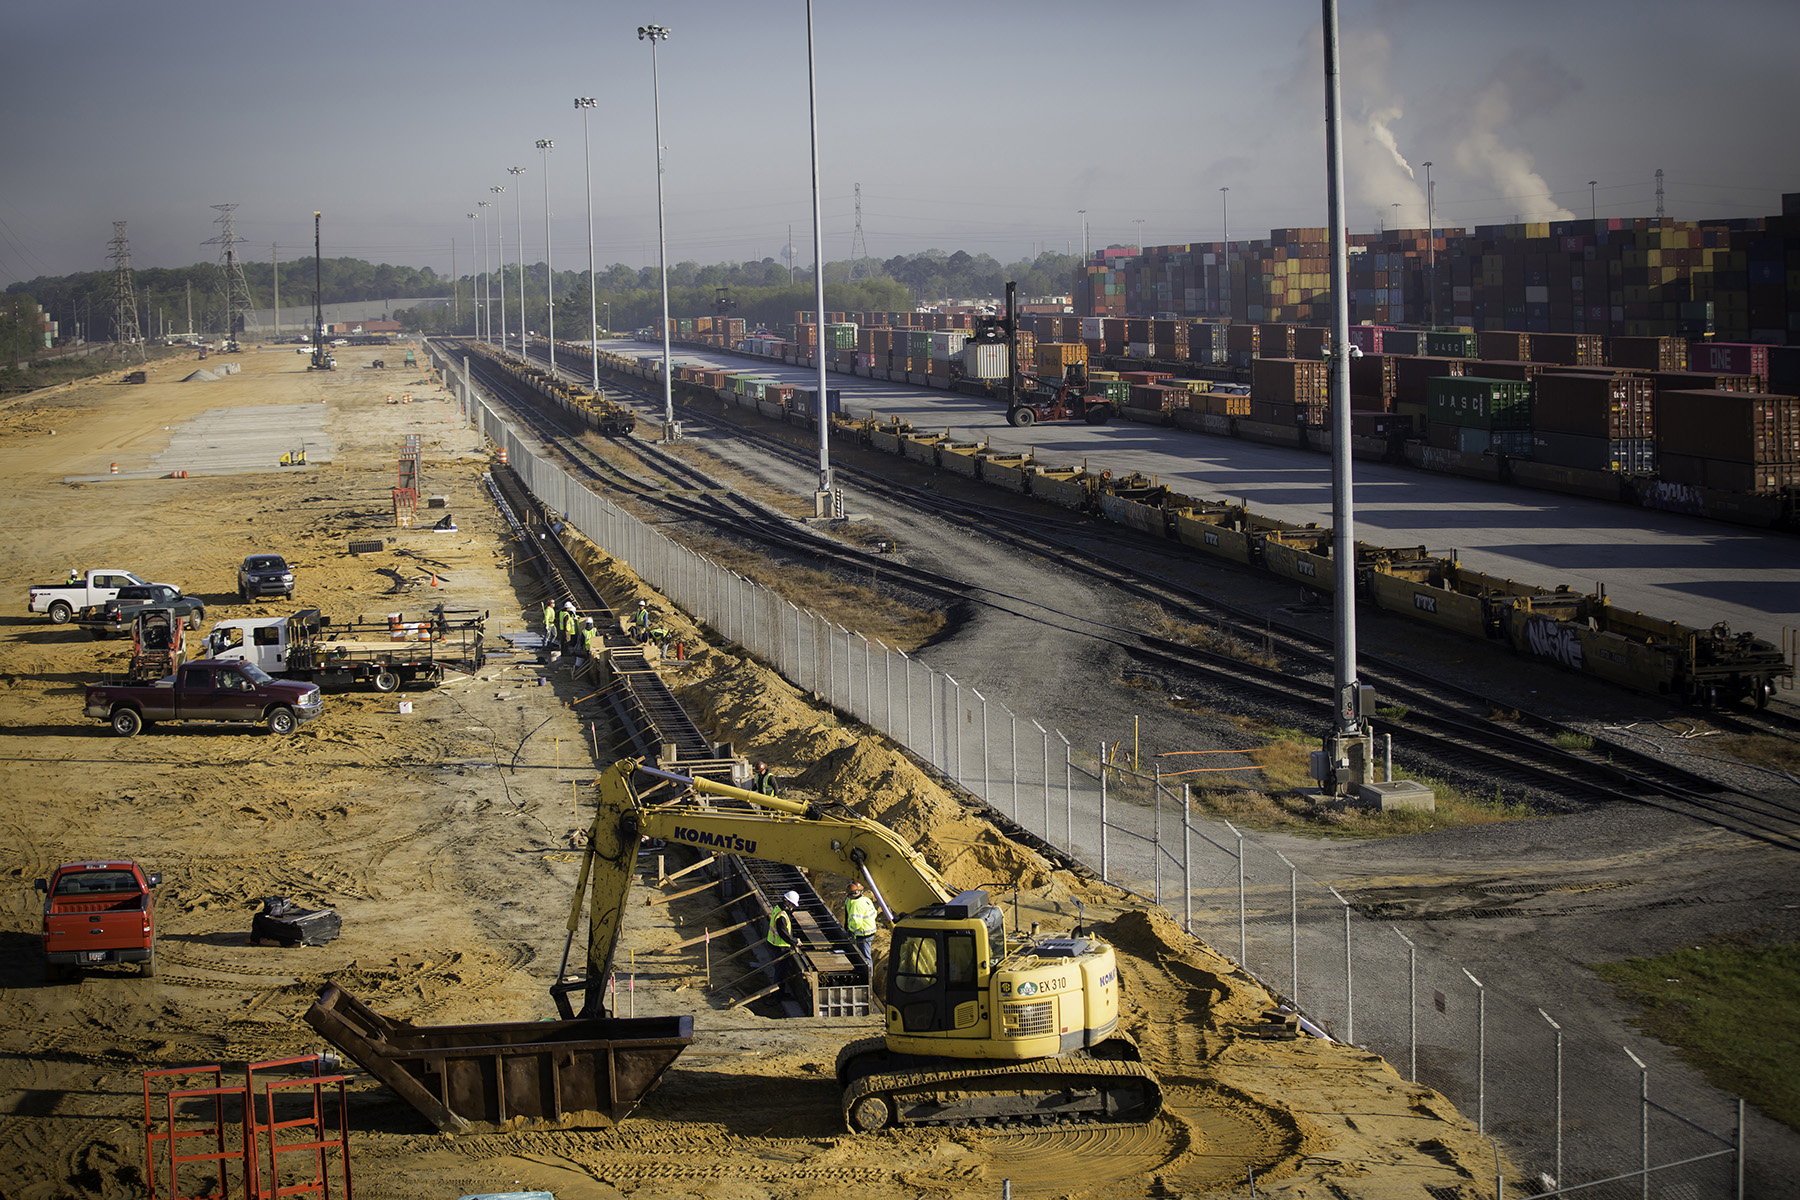 Photo shows construction operations at a new rail yard.